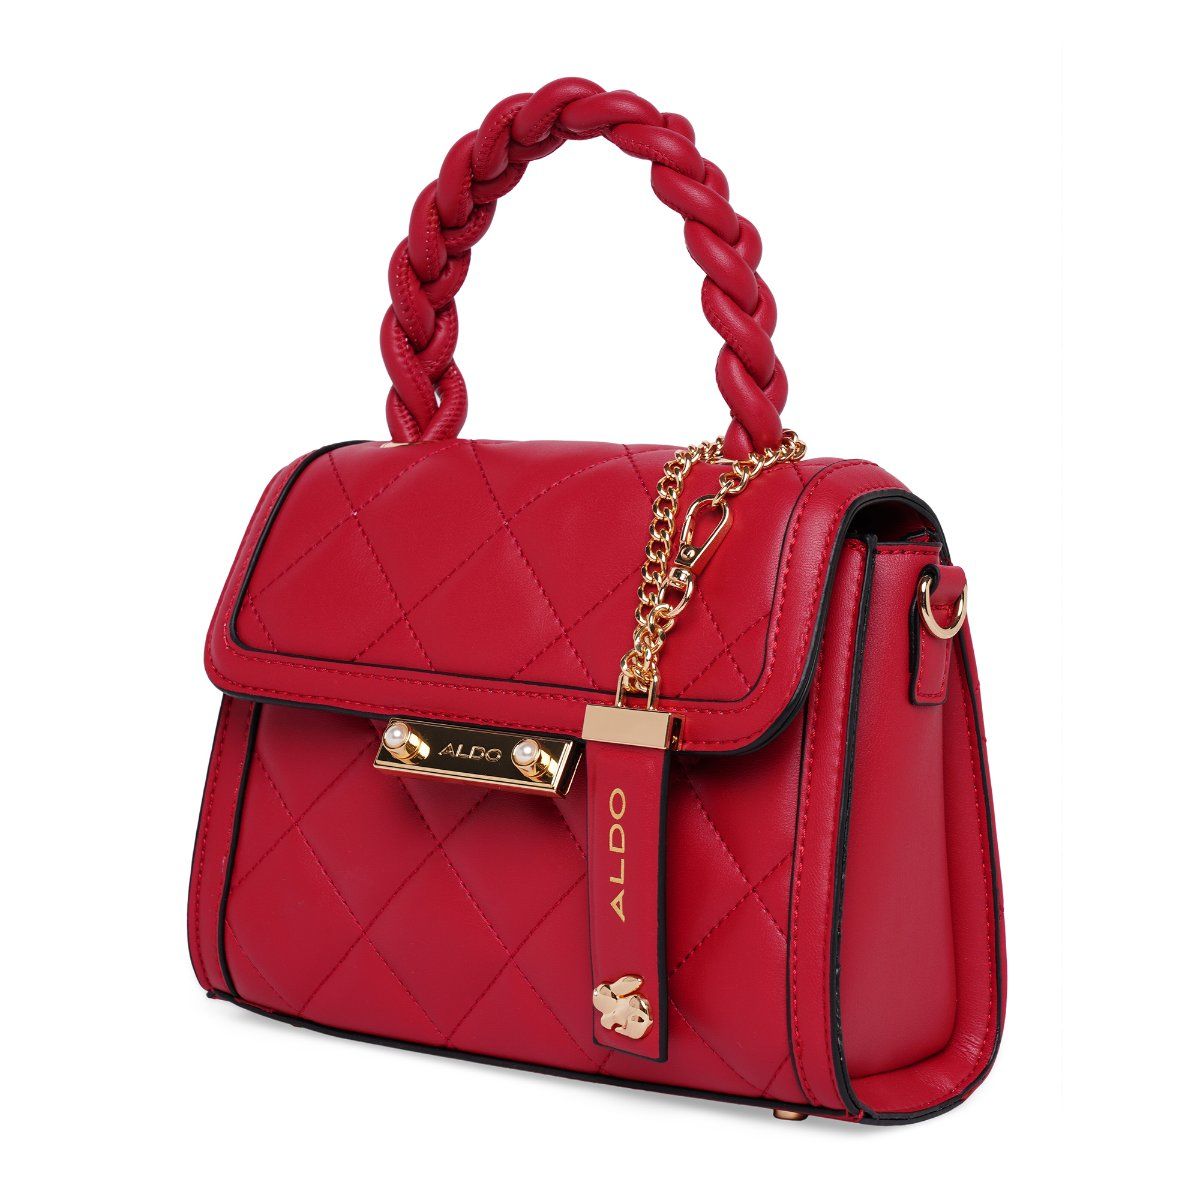 My everyday bag (Aldo Legoiri Top Handle Bag) @aldo_shoes @amazon @ama... |  TikTok